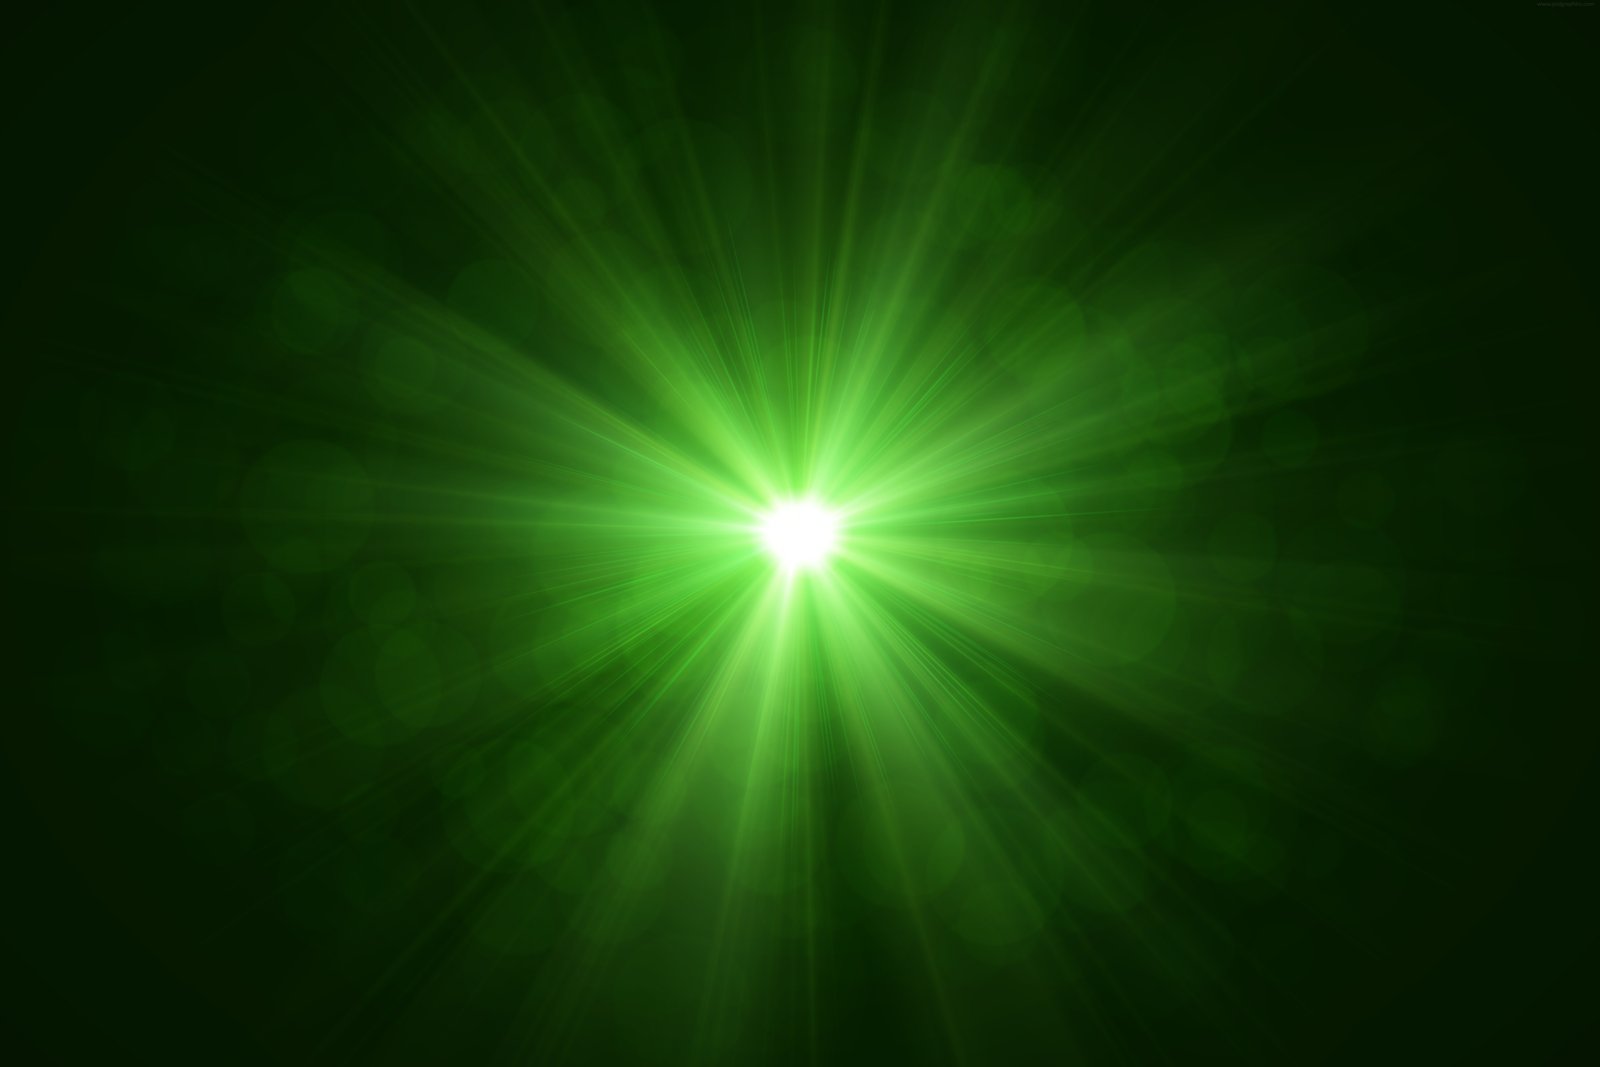 Green light background - PSDgraphics